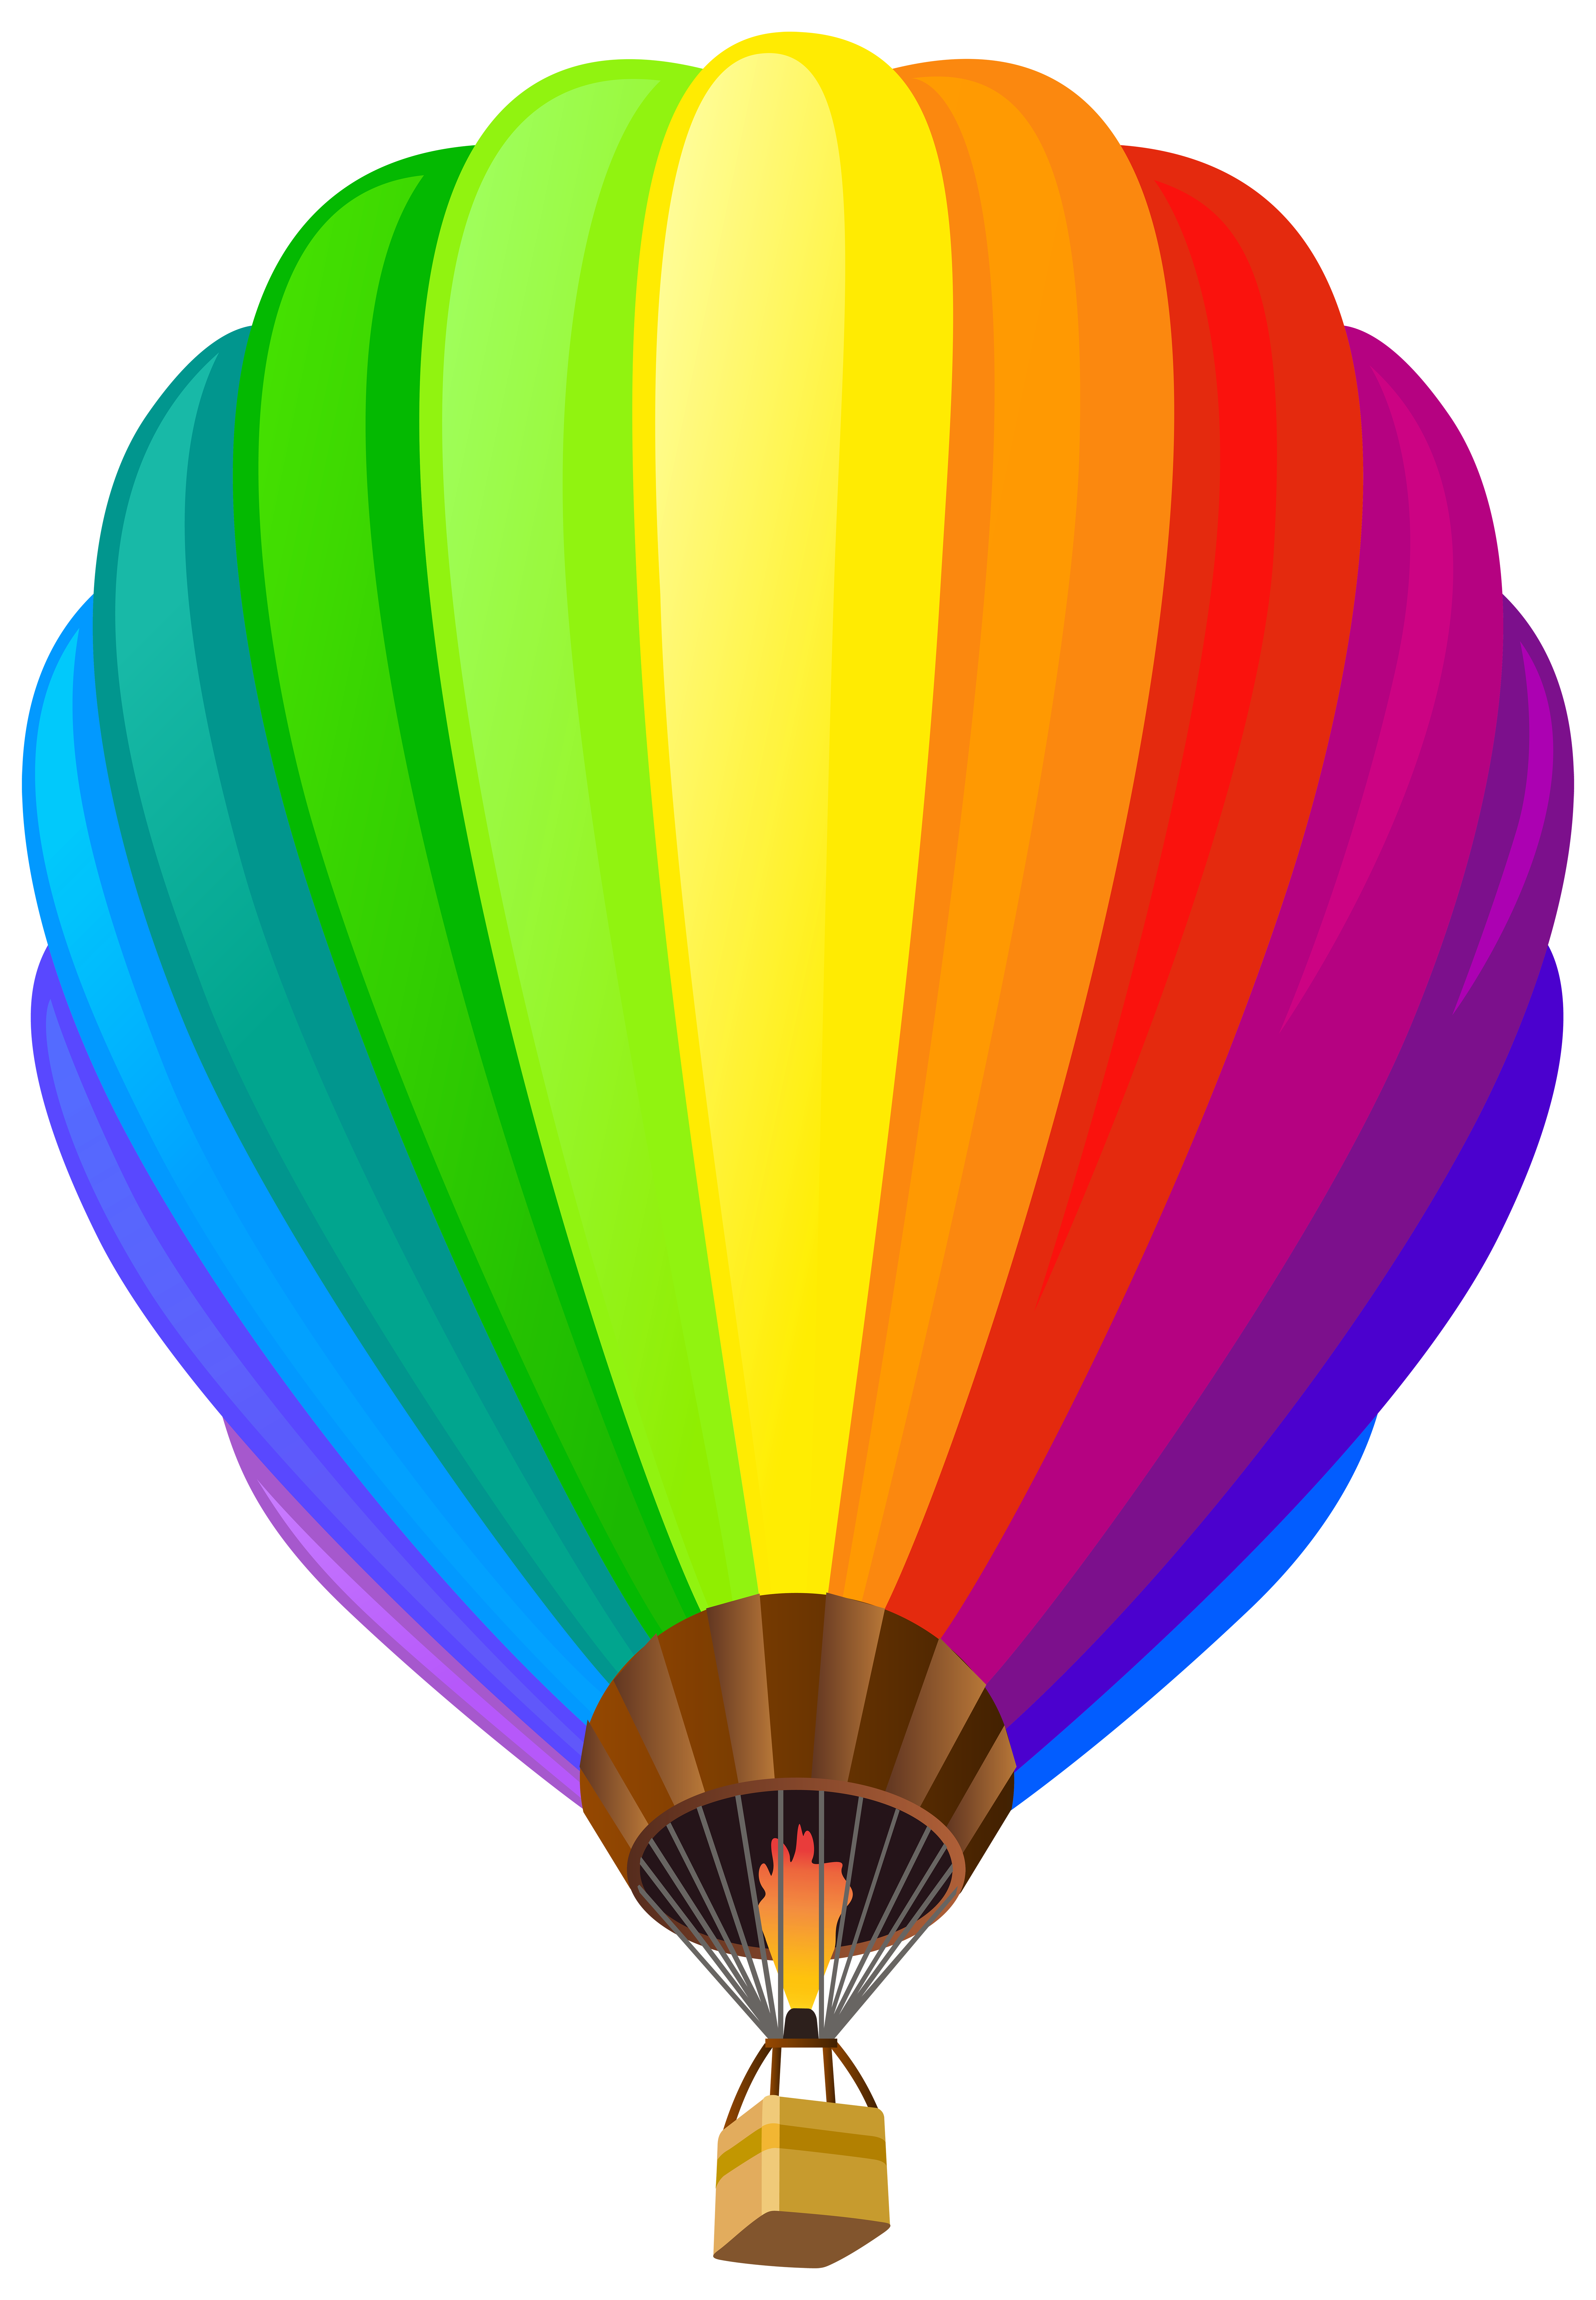 Hot Air Balloon Transparent PNG Clip Art Image